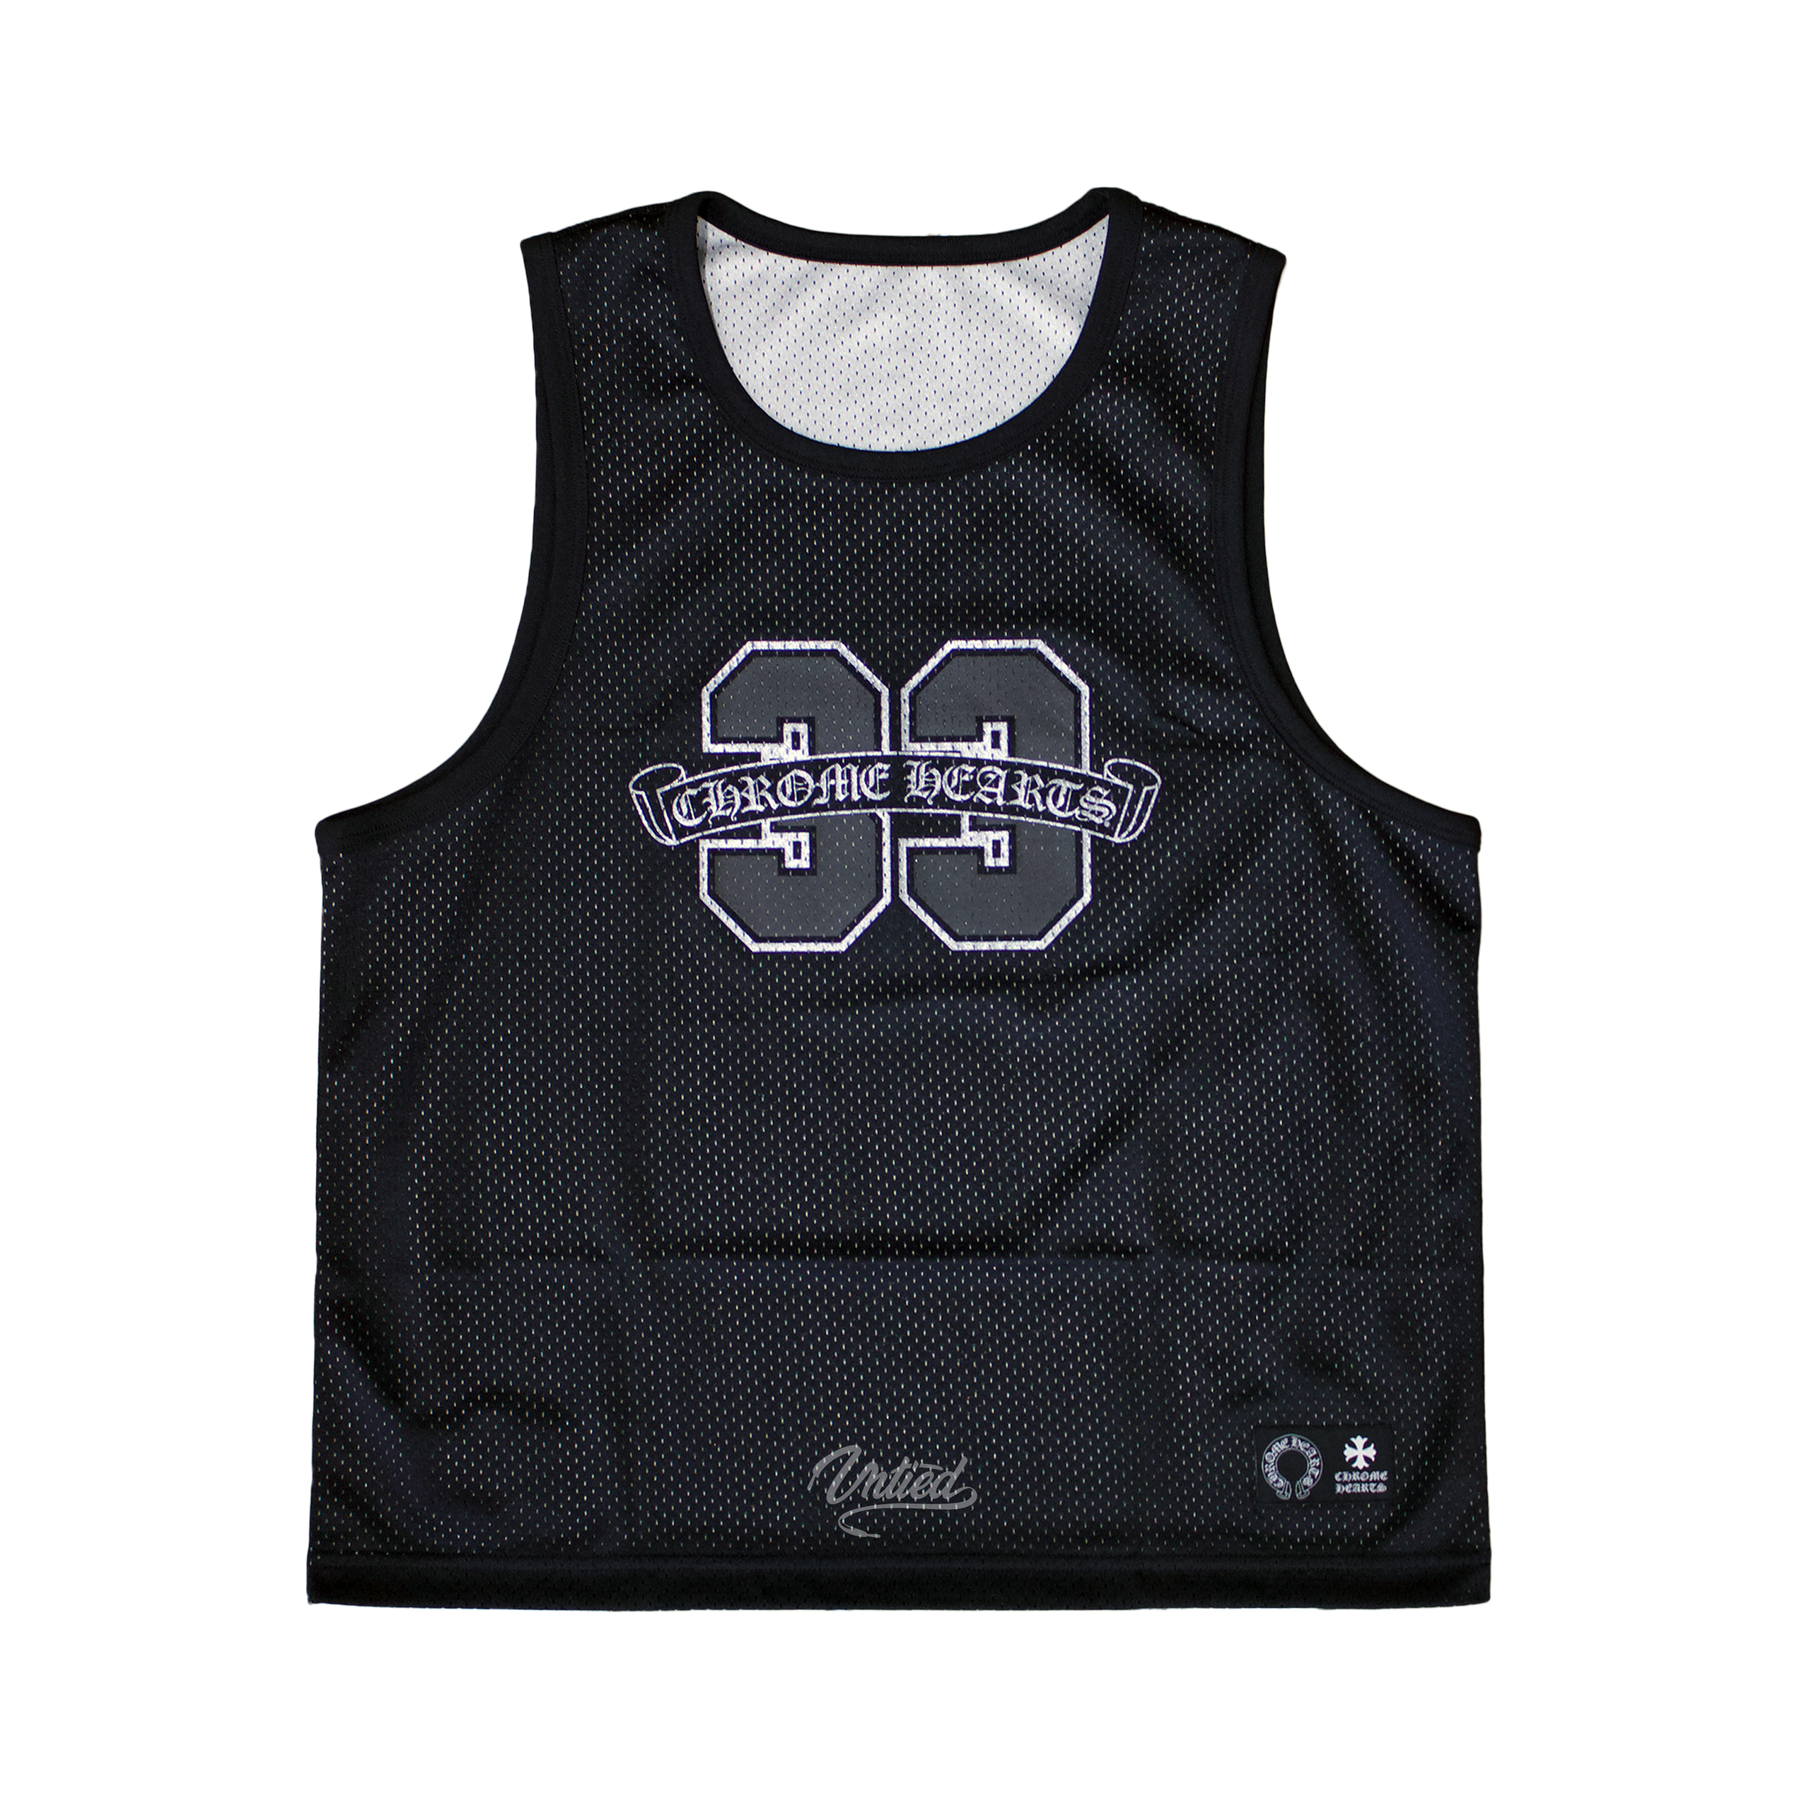 Chrome Hearts Reversible Mesh Basketball Jersey "Black/Silver"